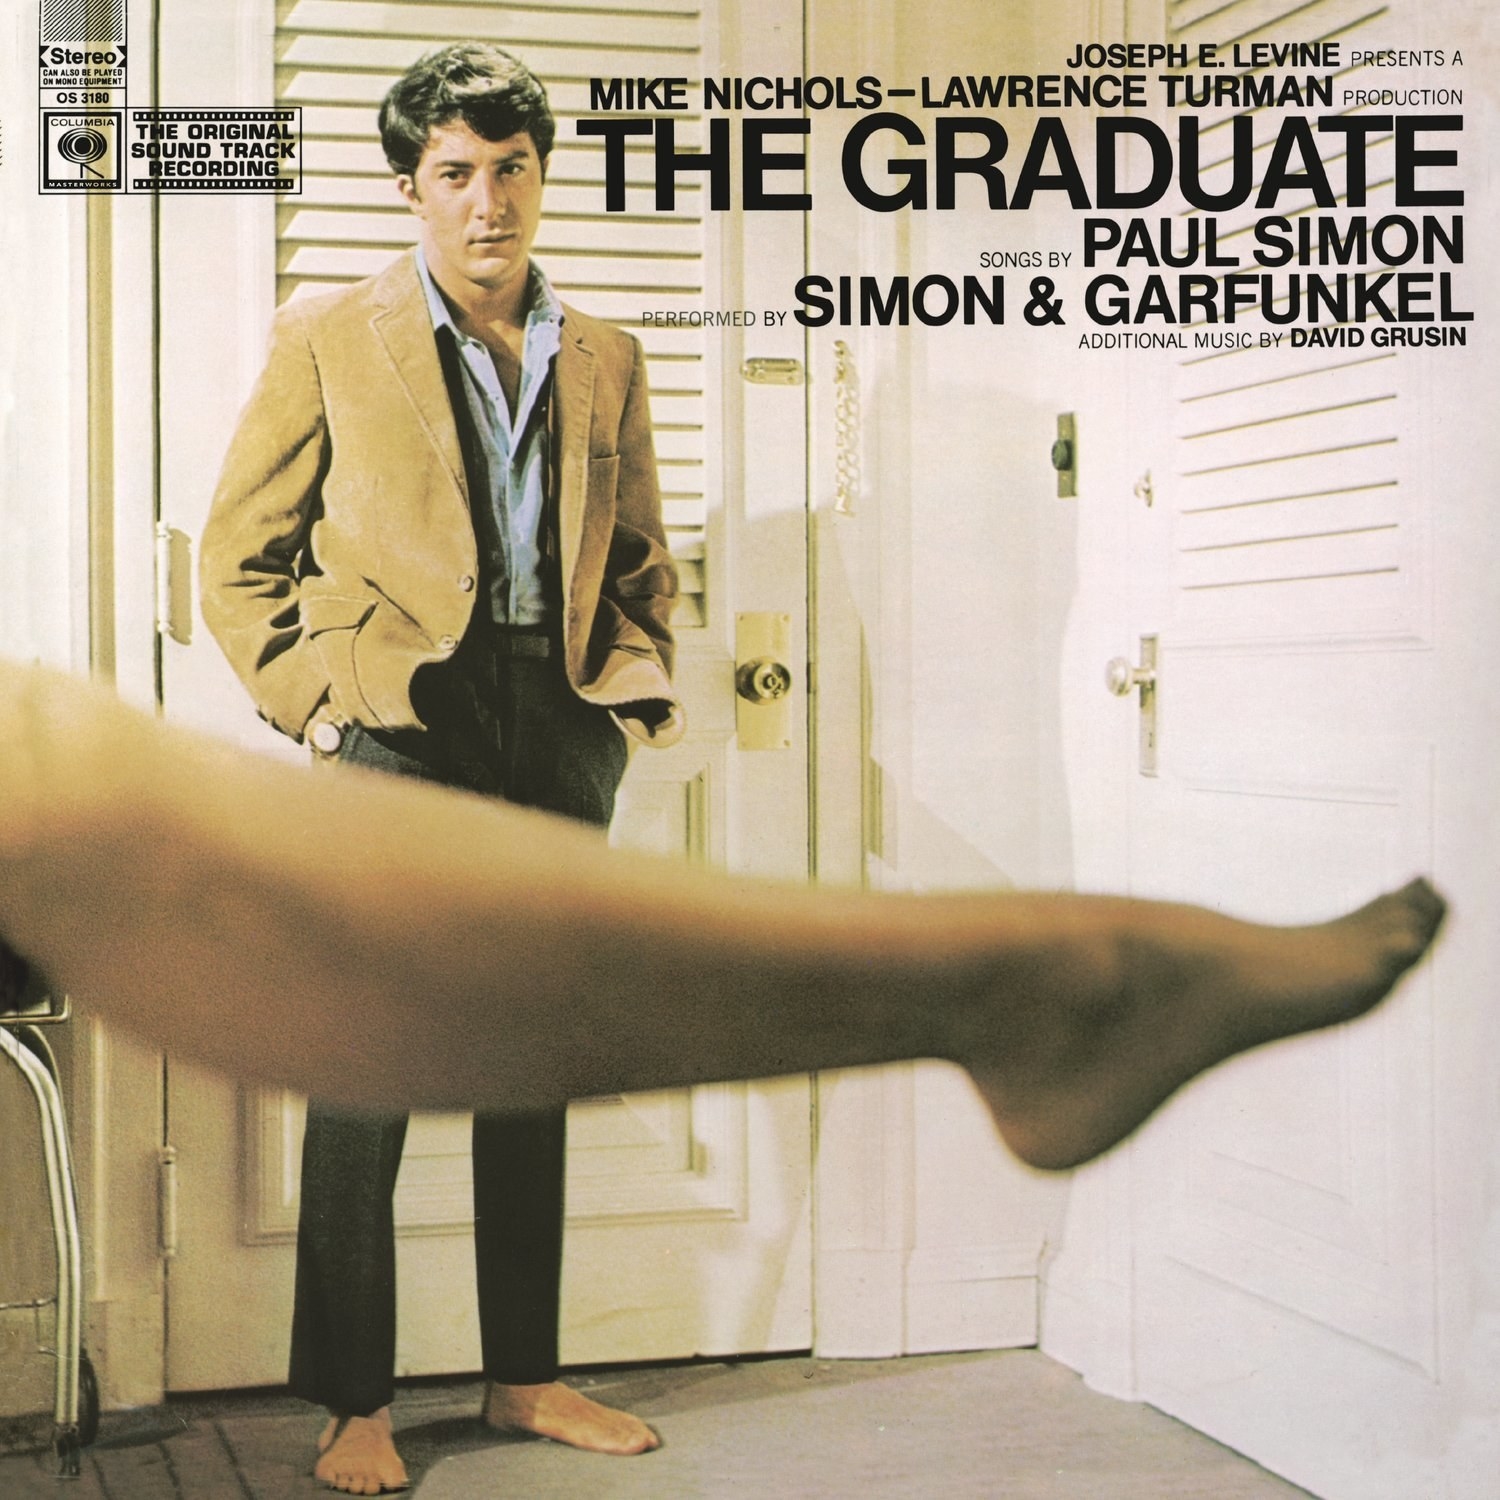 The album cover for The Graduate